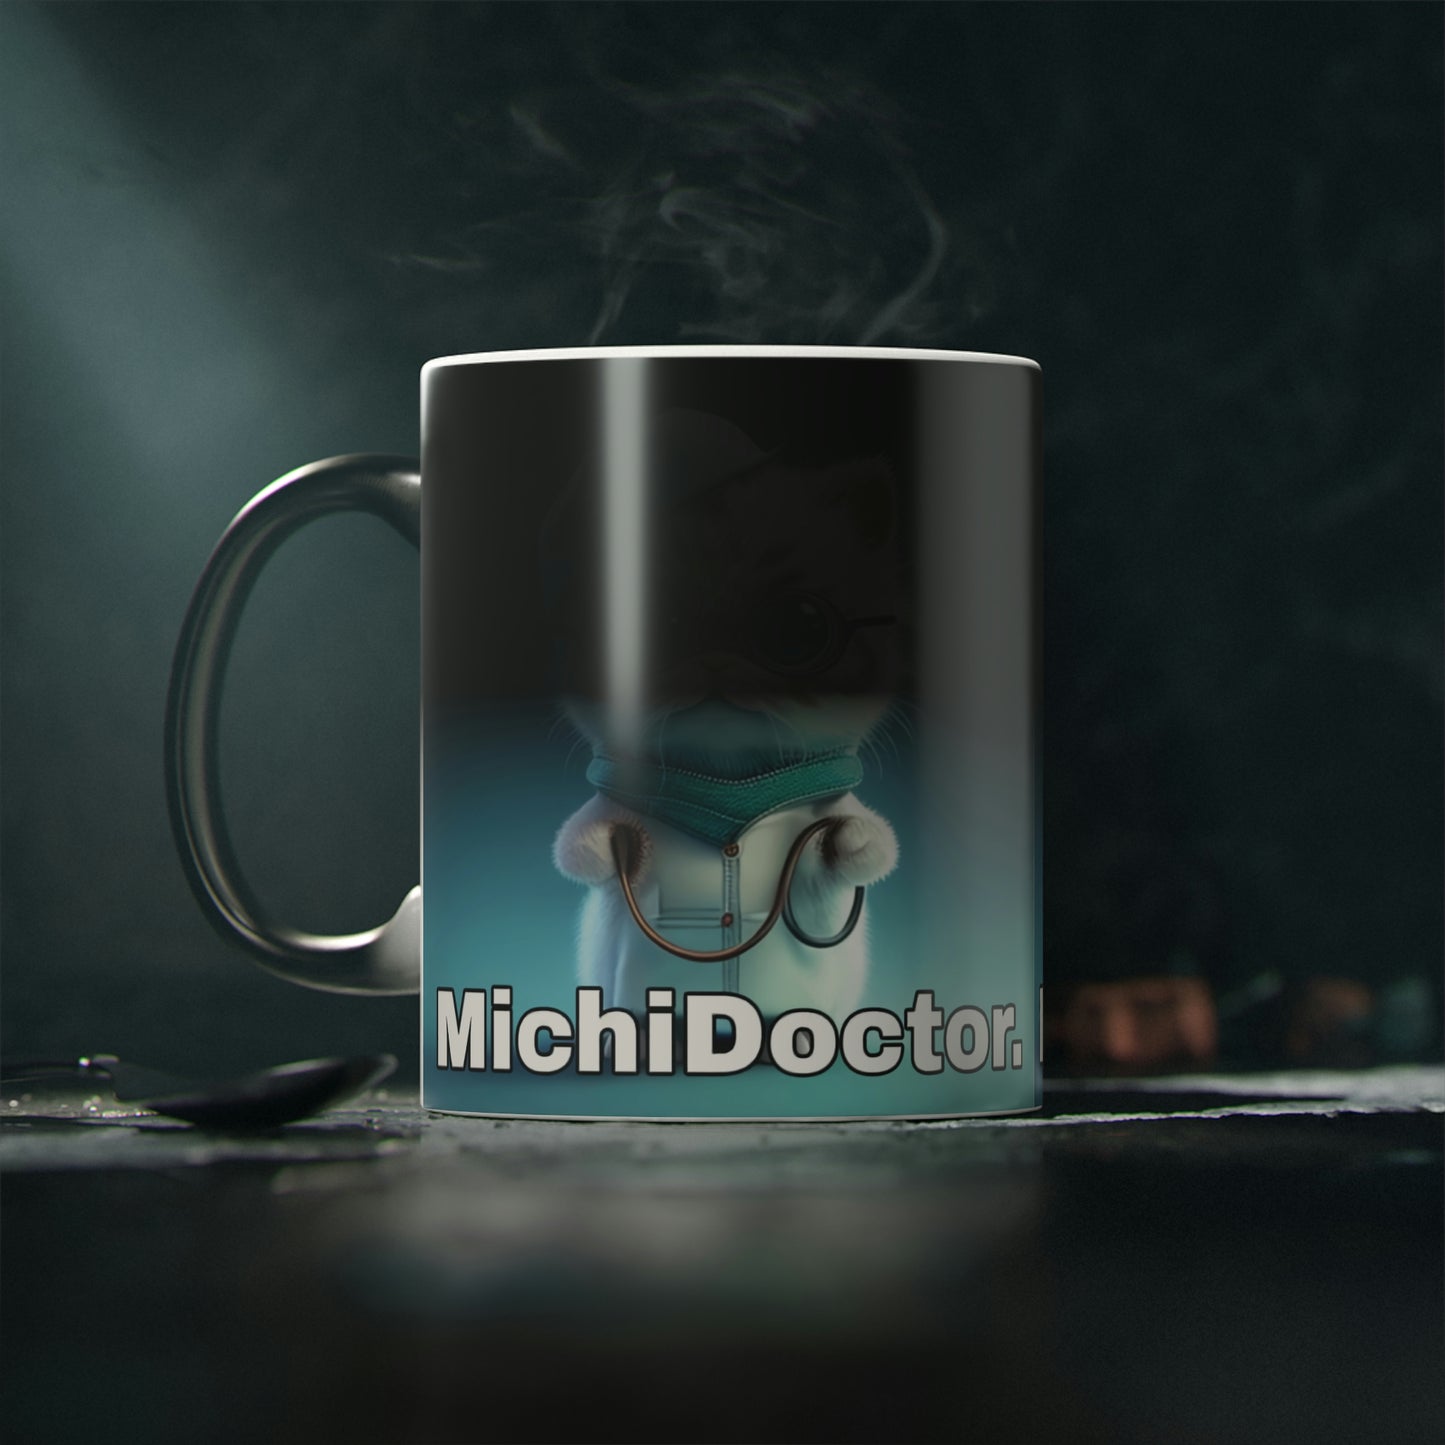 Cat Professions Michi Doctor Mug